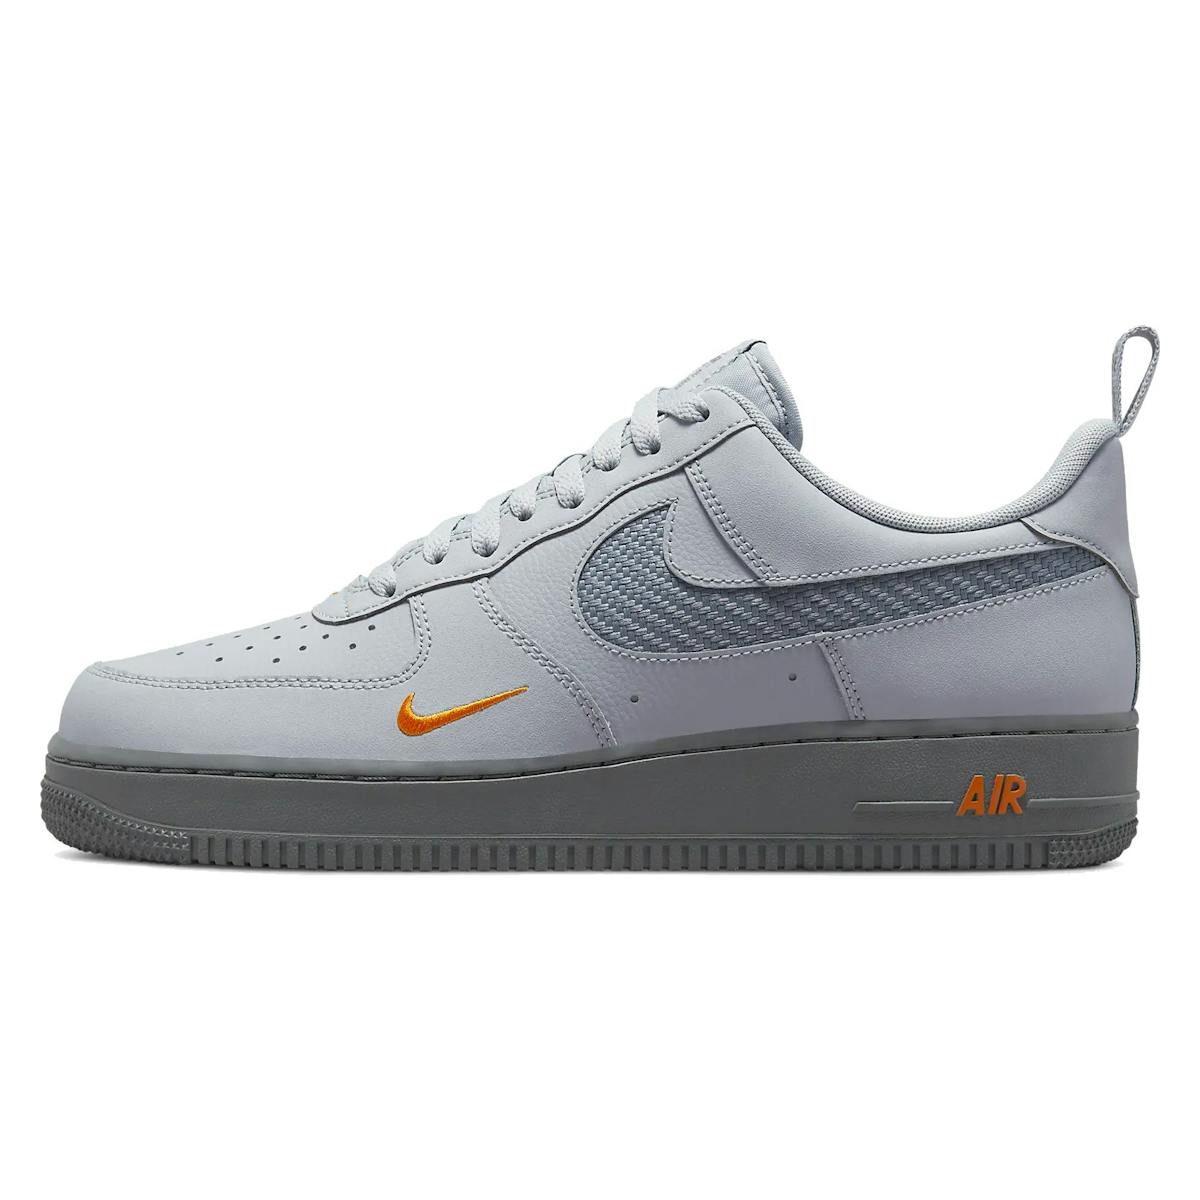 Nike Air Force 1 '07 "Grey Kumquat"